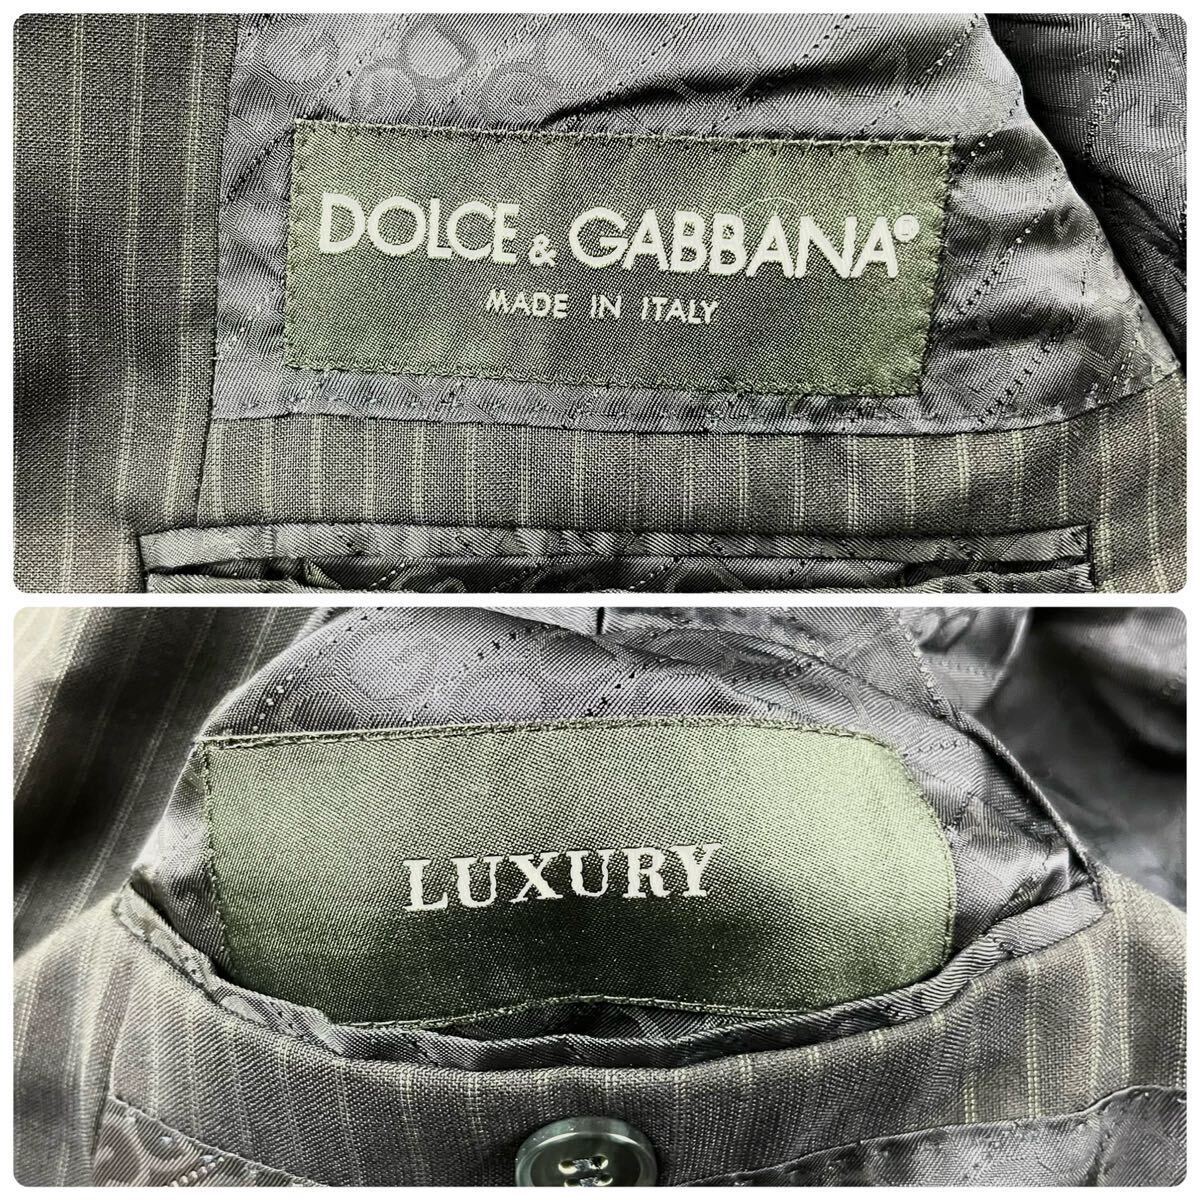  overwhelming presence * unused class XL size * Dolce & Gabbana [ top class line ]DOLCE&GABBANA suit LUXURY three-piece * Toro Toro feeling of quality *